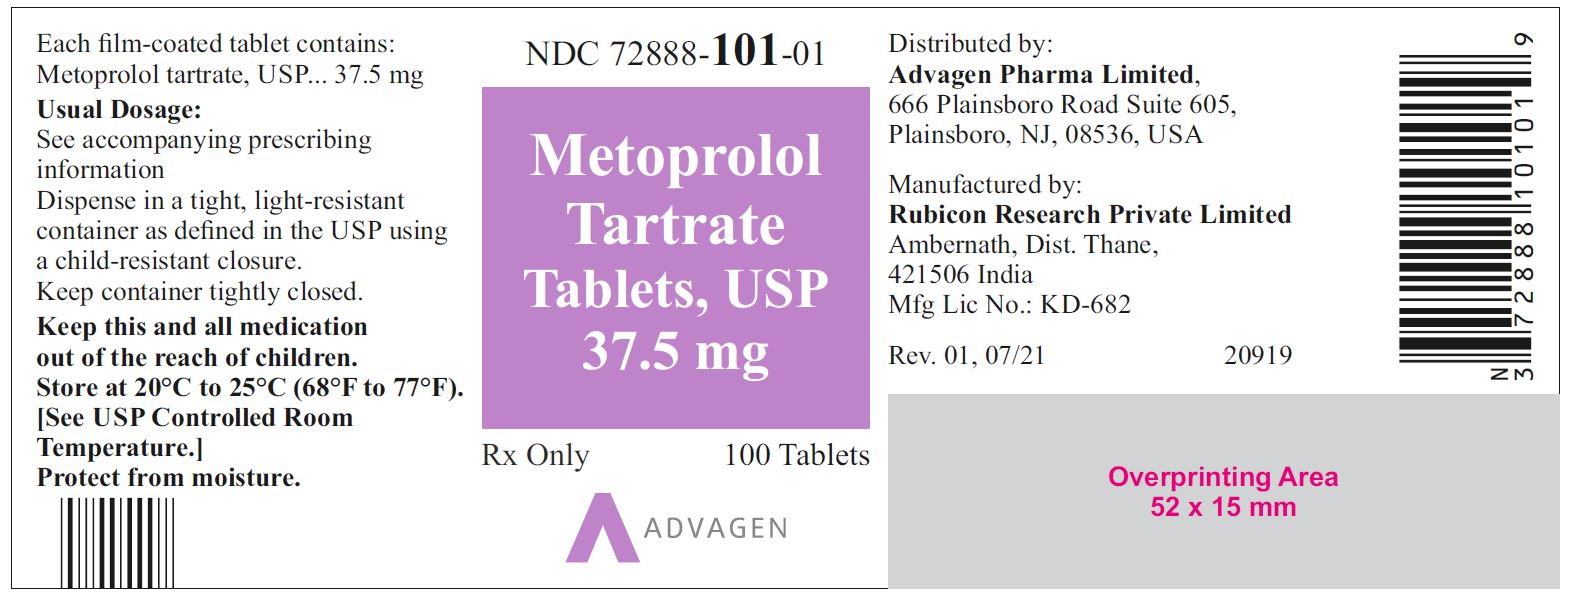 NDC: <a href=/NDC/72888-101-01>72888-101-01</a> - Metoprolol Tartrate Tablets, USP 37.5 mg - 100 Tablets